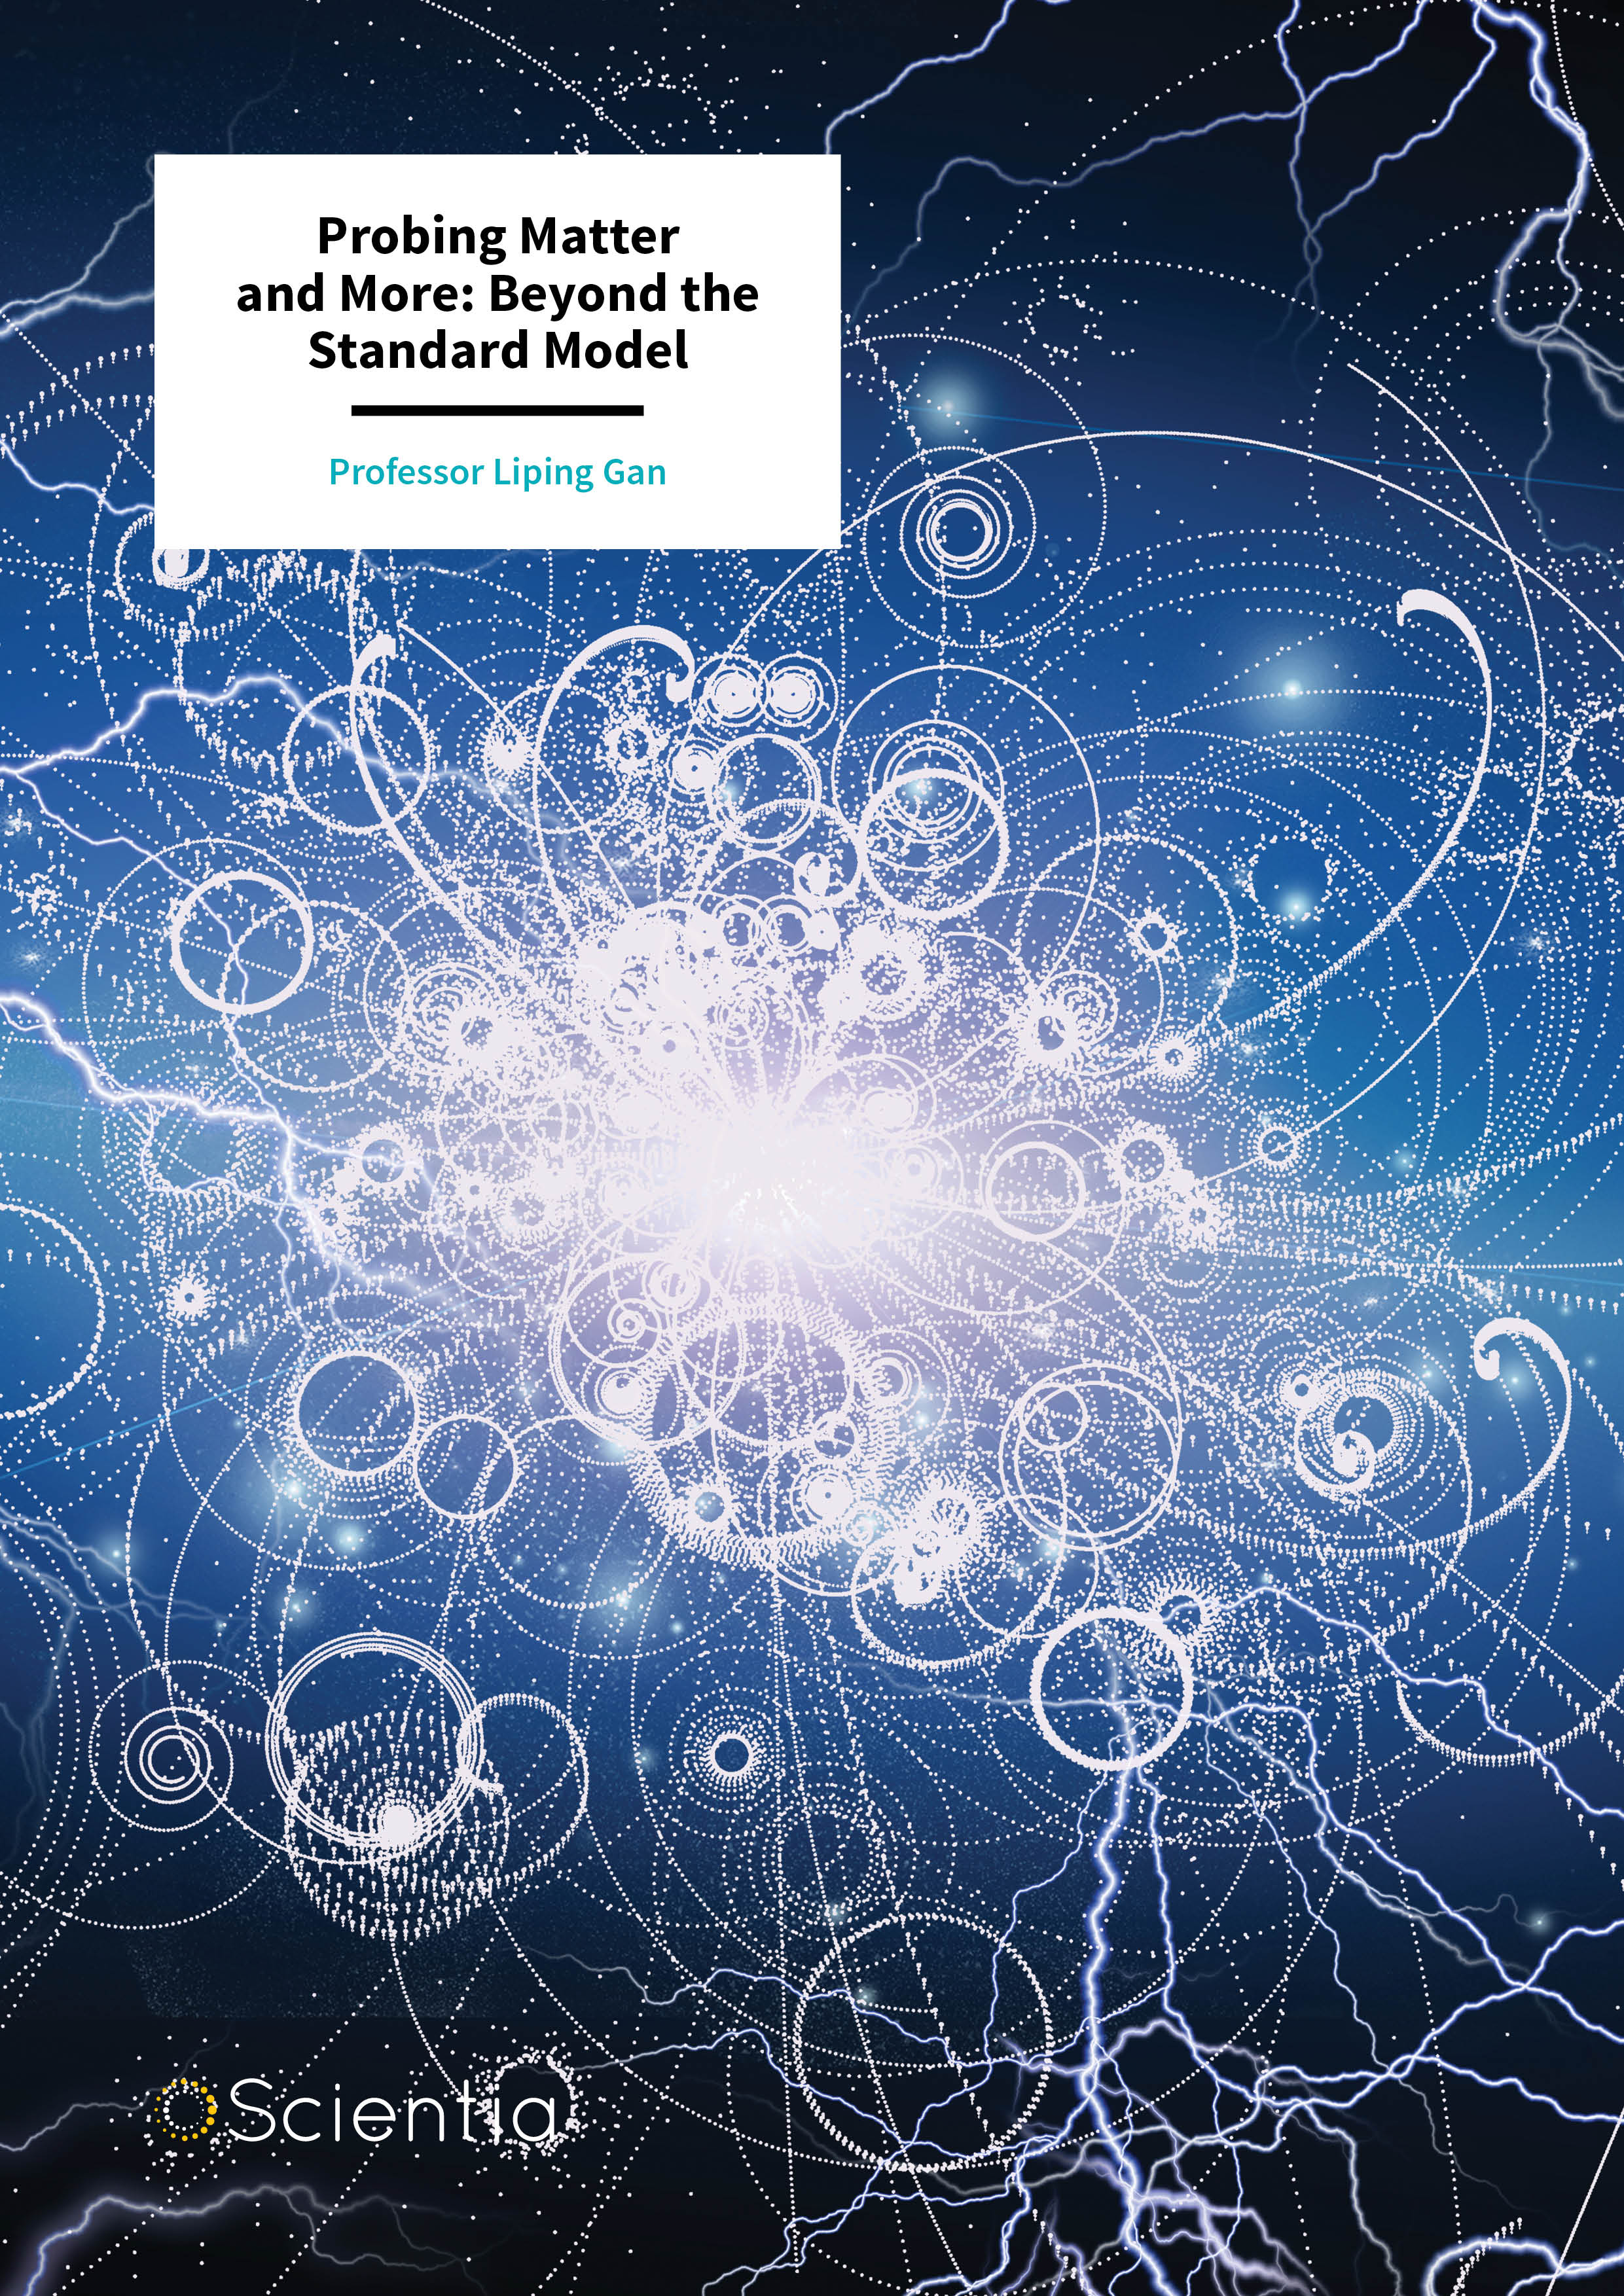 Professor Liping Gan – Probing Matter and More: Beyond the Standard Model